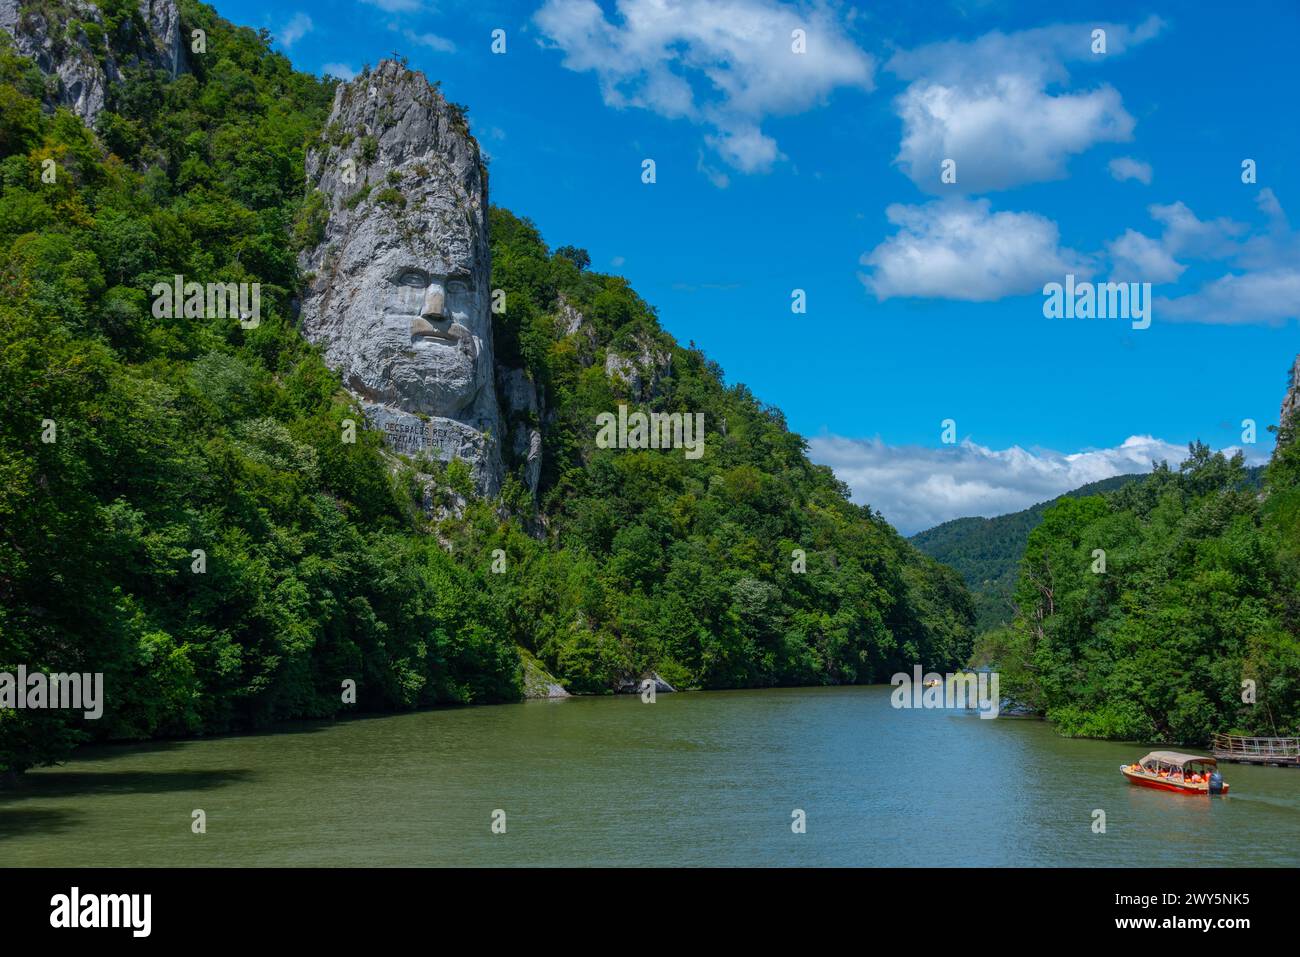 Felsskulptur des Decebalus im Iron Gates Nationalpark in Rumänien Stockfoto